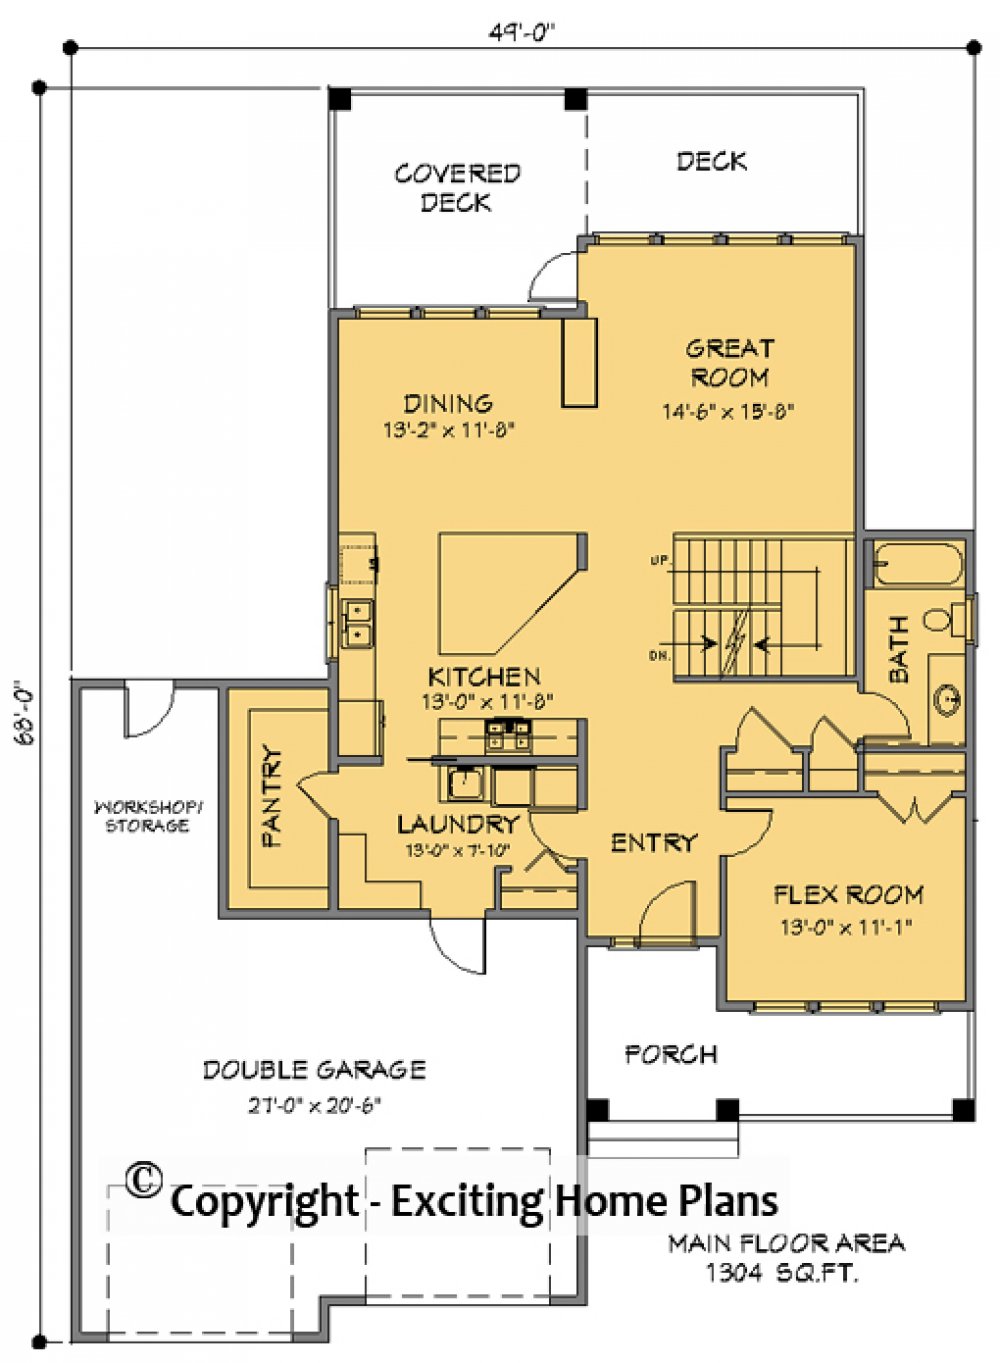 House Plan E1712-10 Main Floor Plan